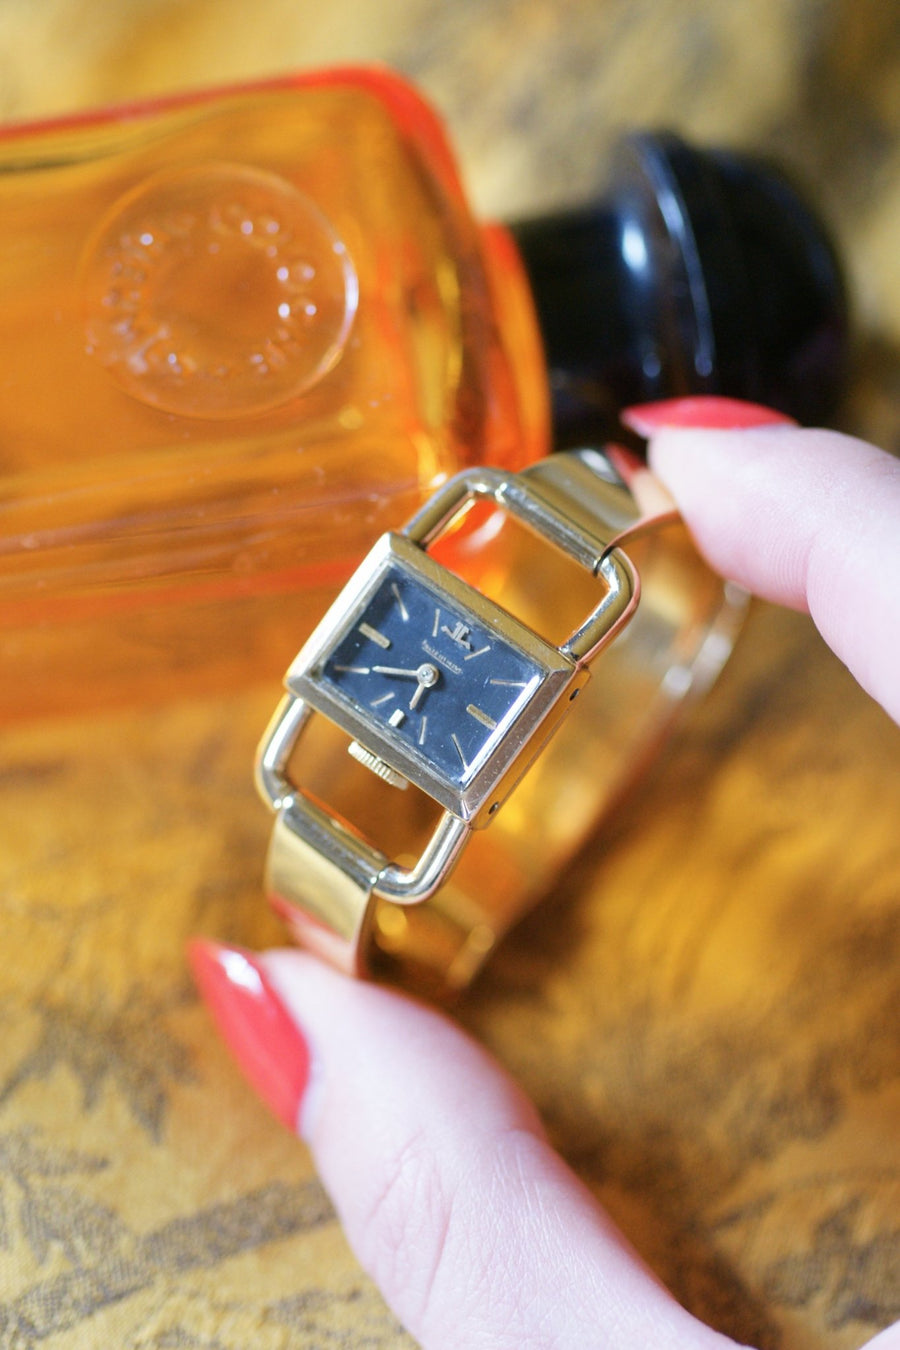 Etrier Jaeger LeCoultre for Hermès Women's all-gold mechanical watch, 1970s - Galerie Pénélope